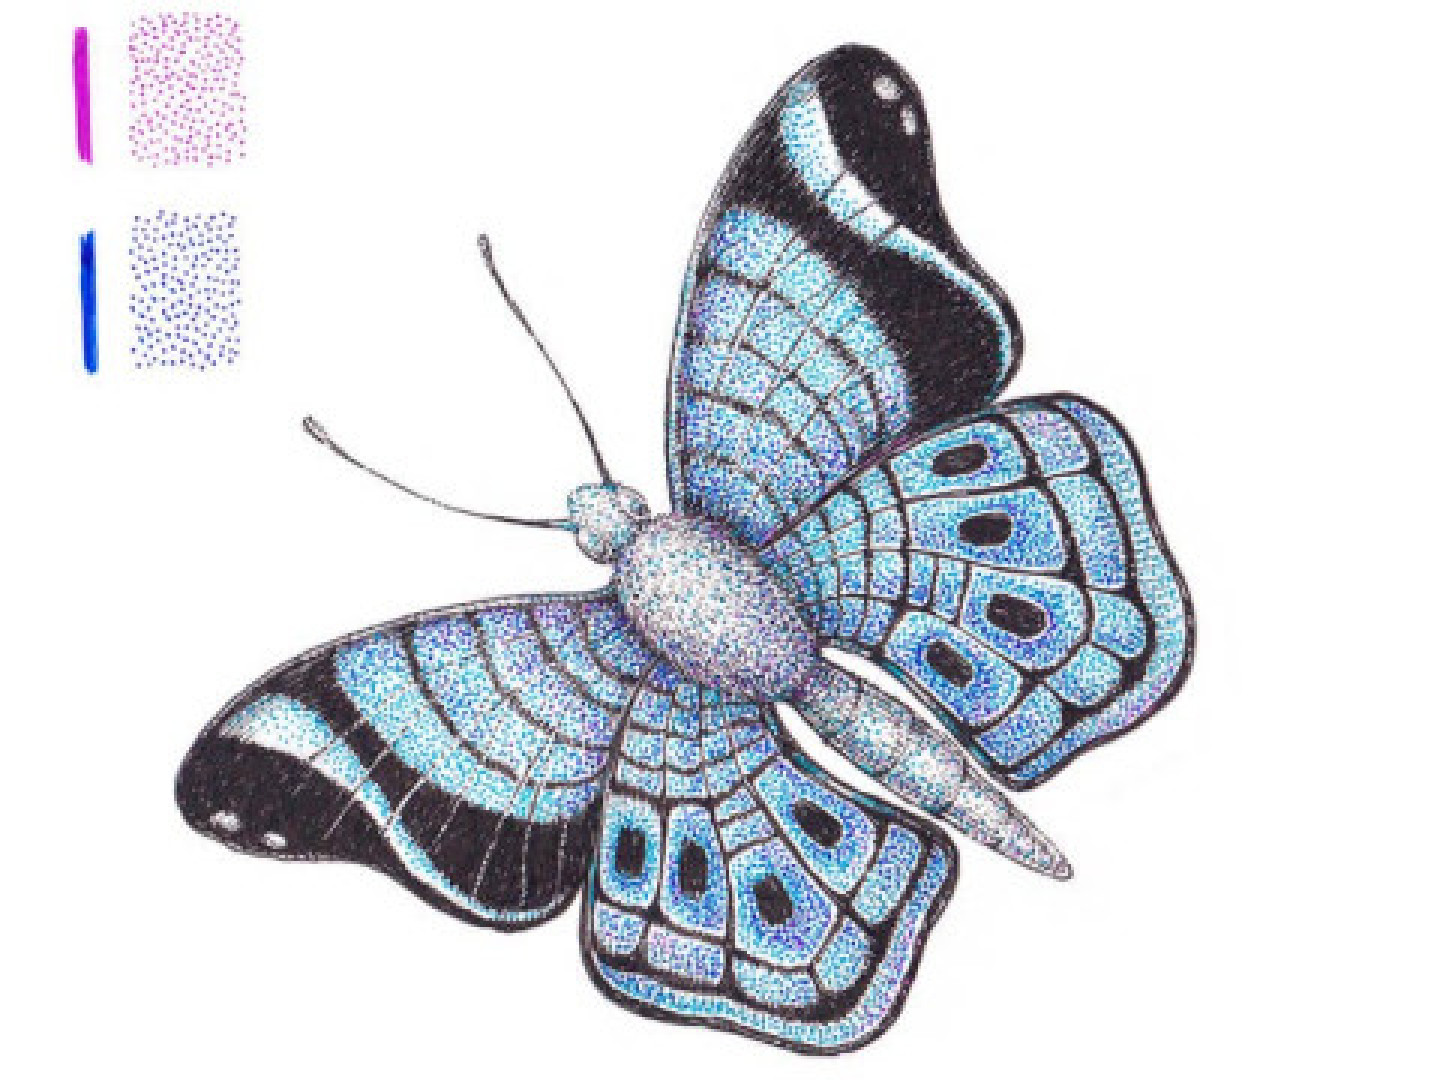 Cum desenăm un fluture frumos?